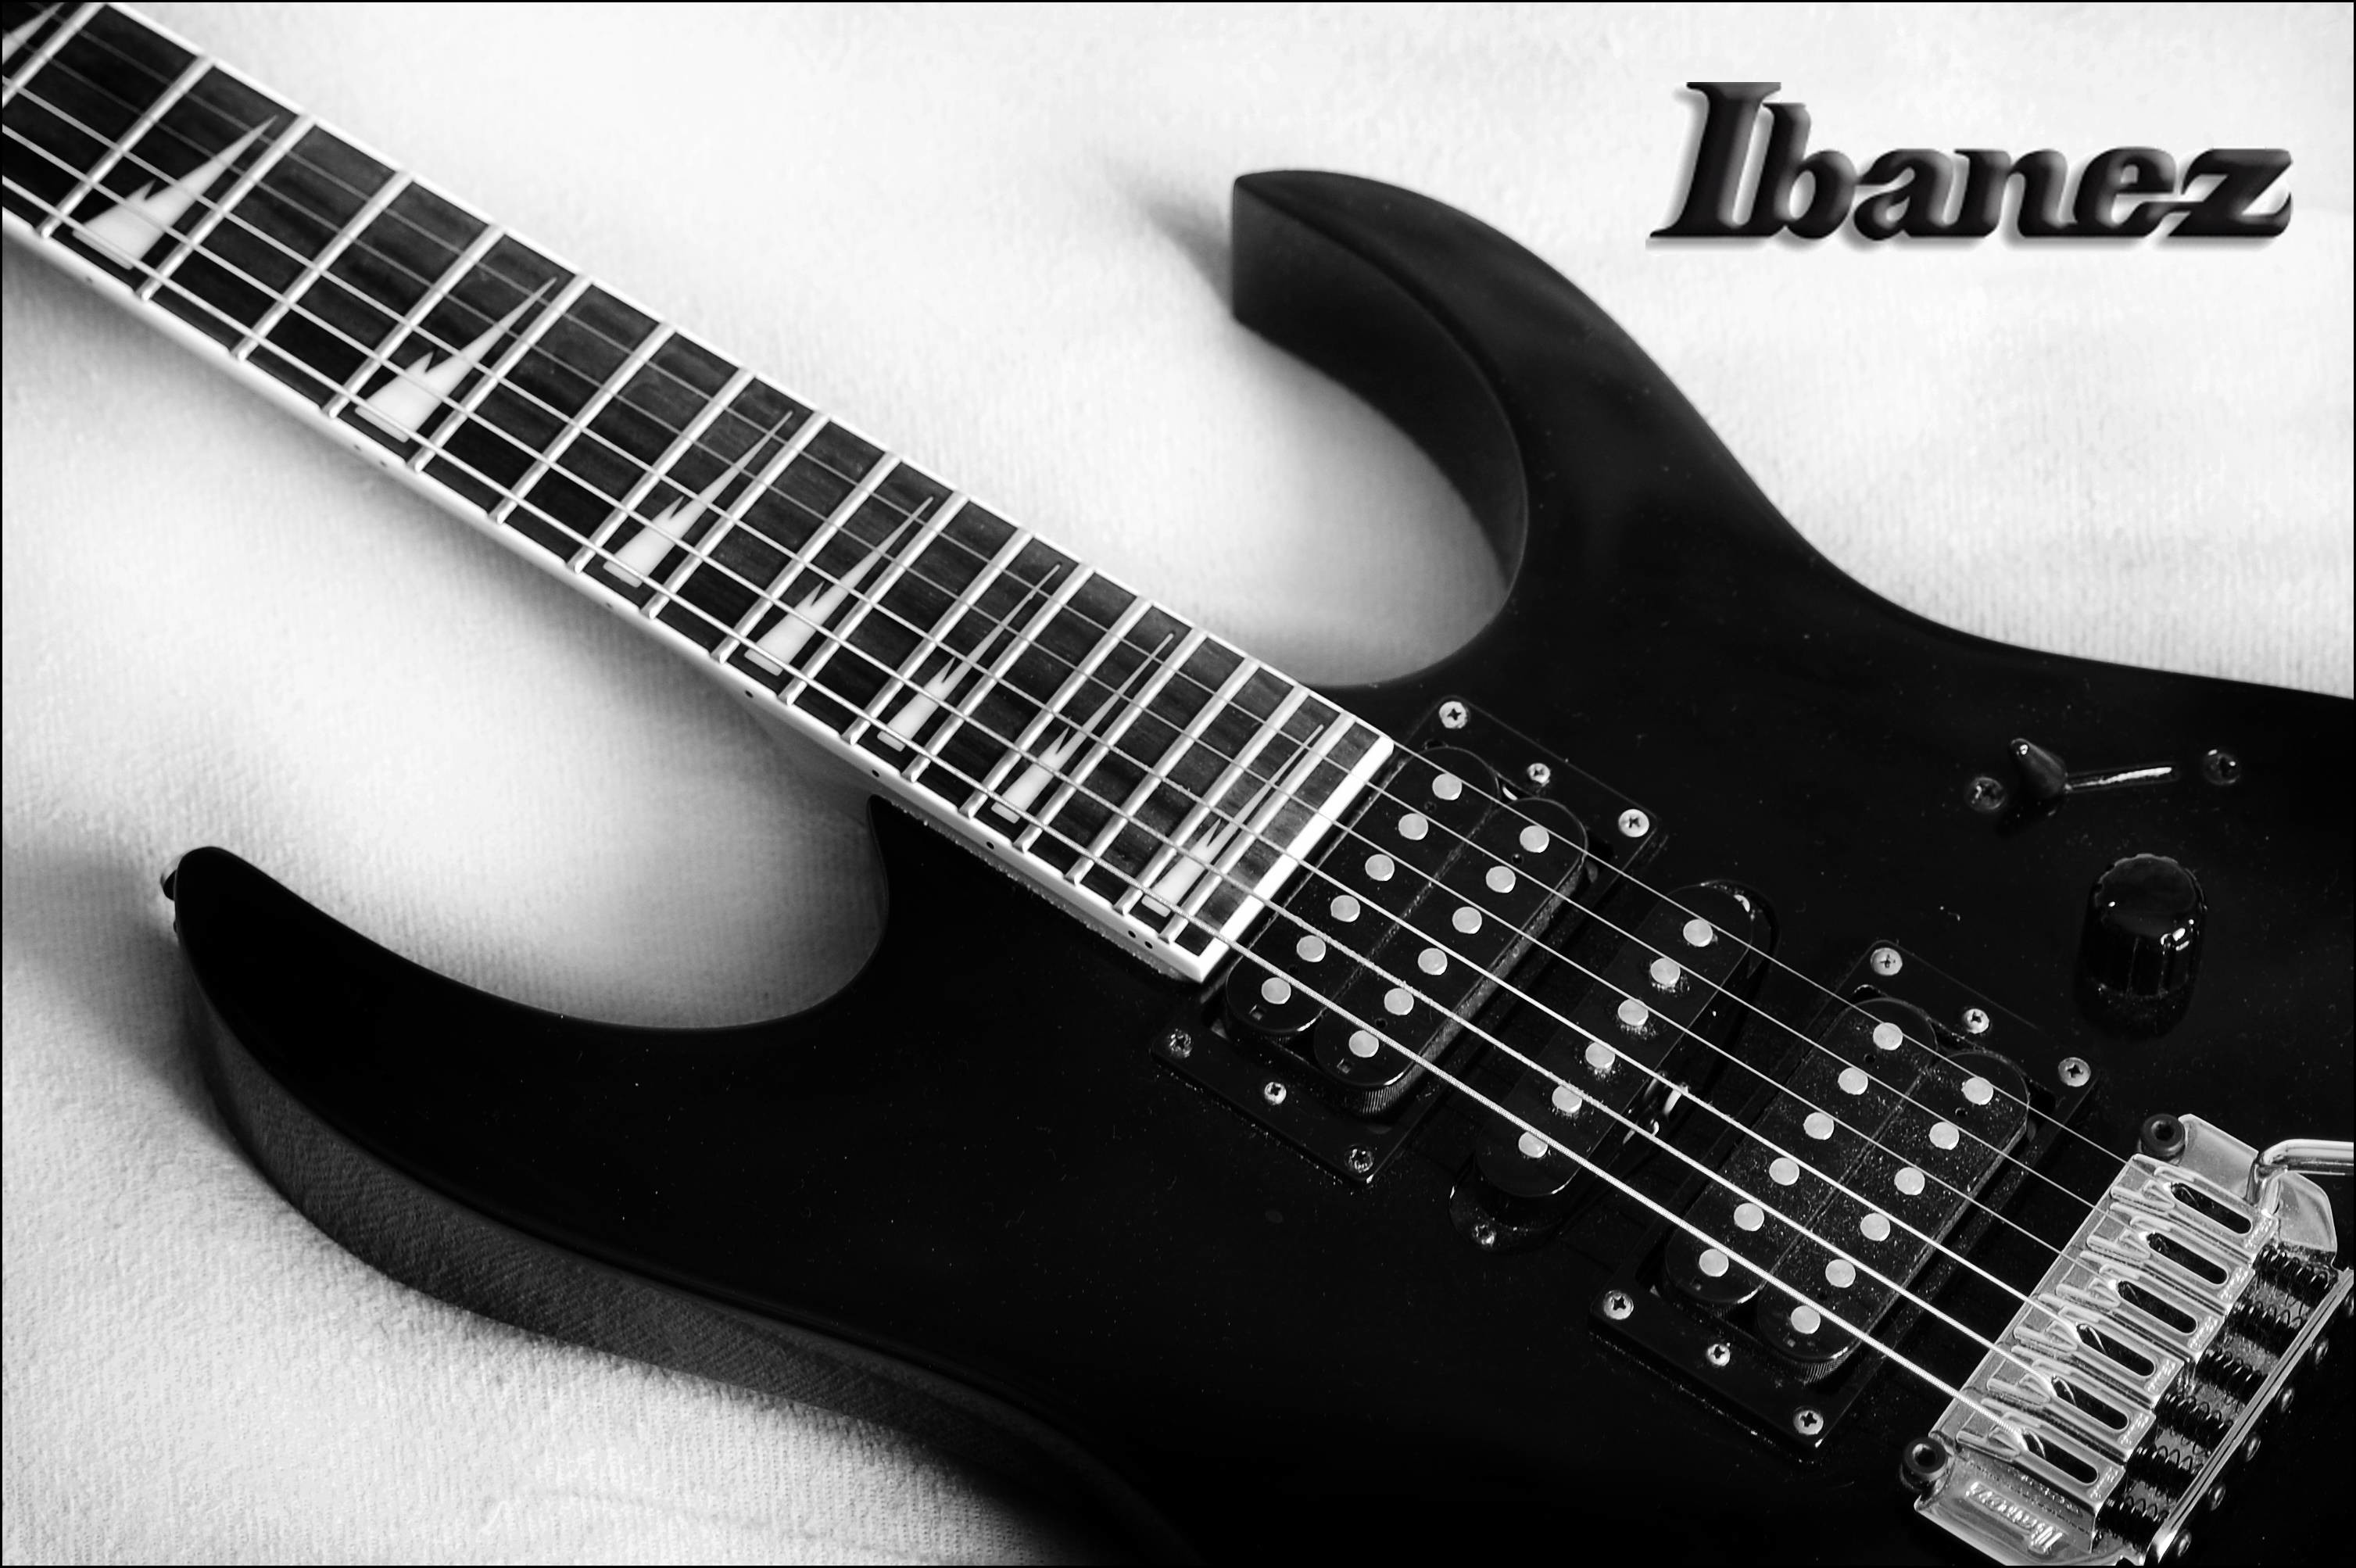 Ibanez Guitar Wallpaper Image